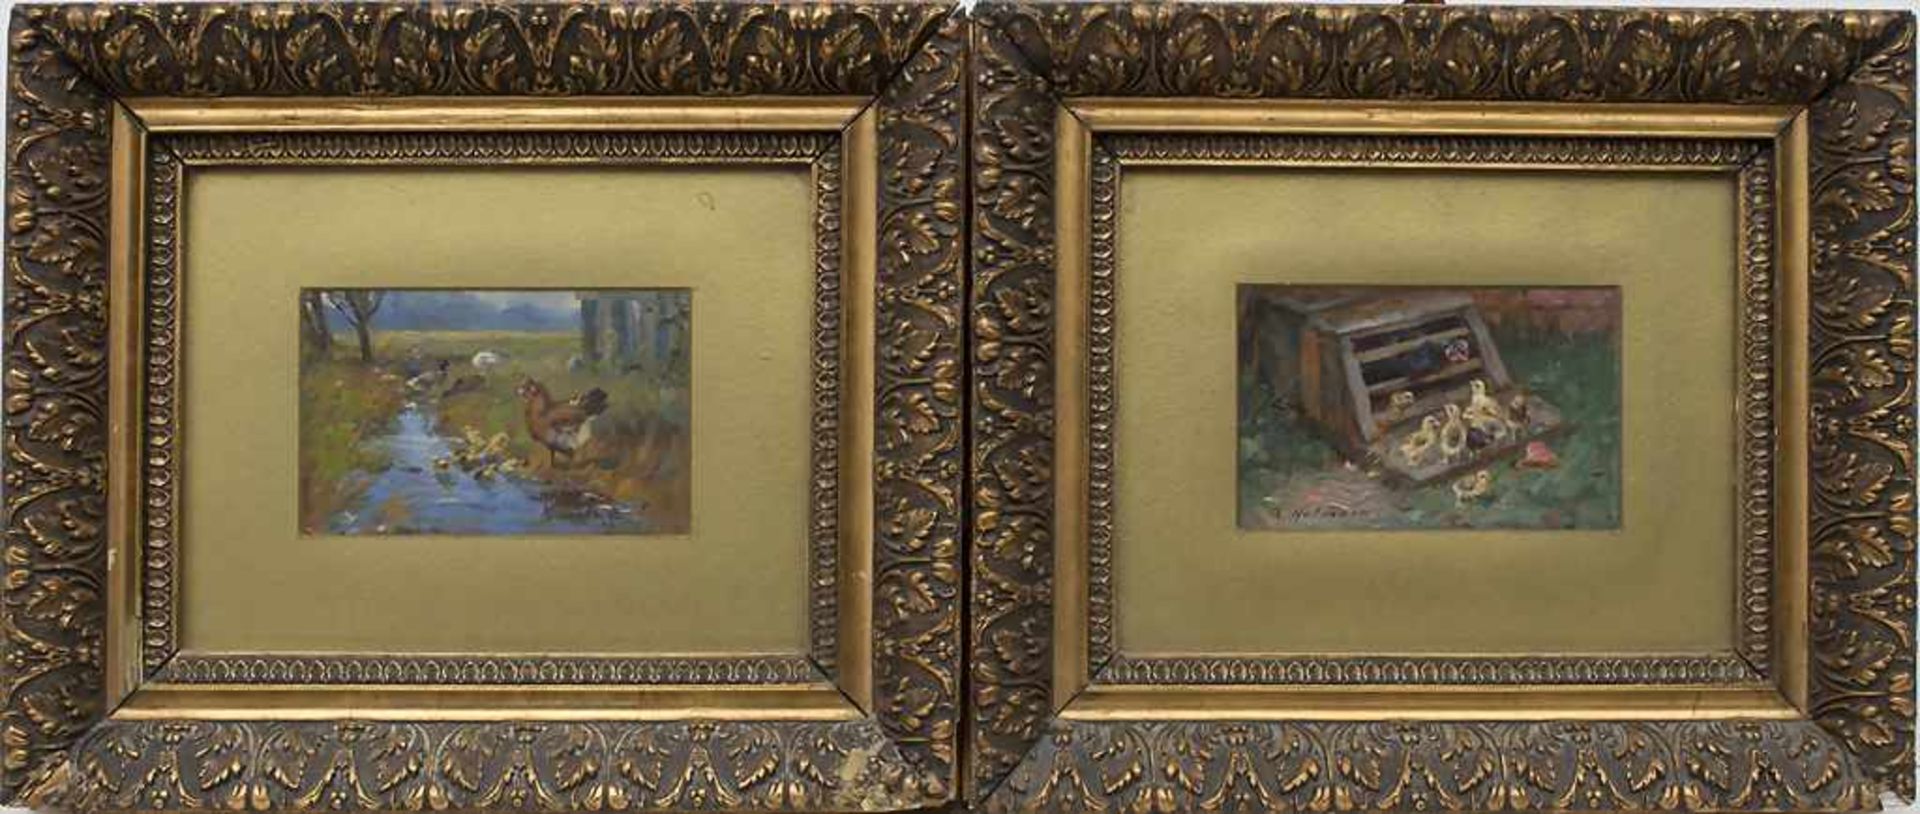 A. Hofmann (19./20. Jh.), 2 Gemälde 'Hühner mit Küken' / 2 paintings 'Chicken and chicks'Technik: Öl